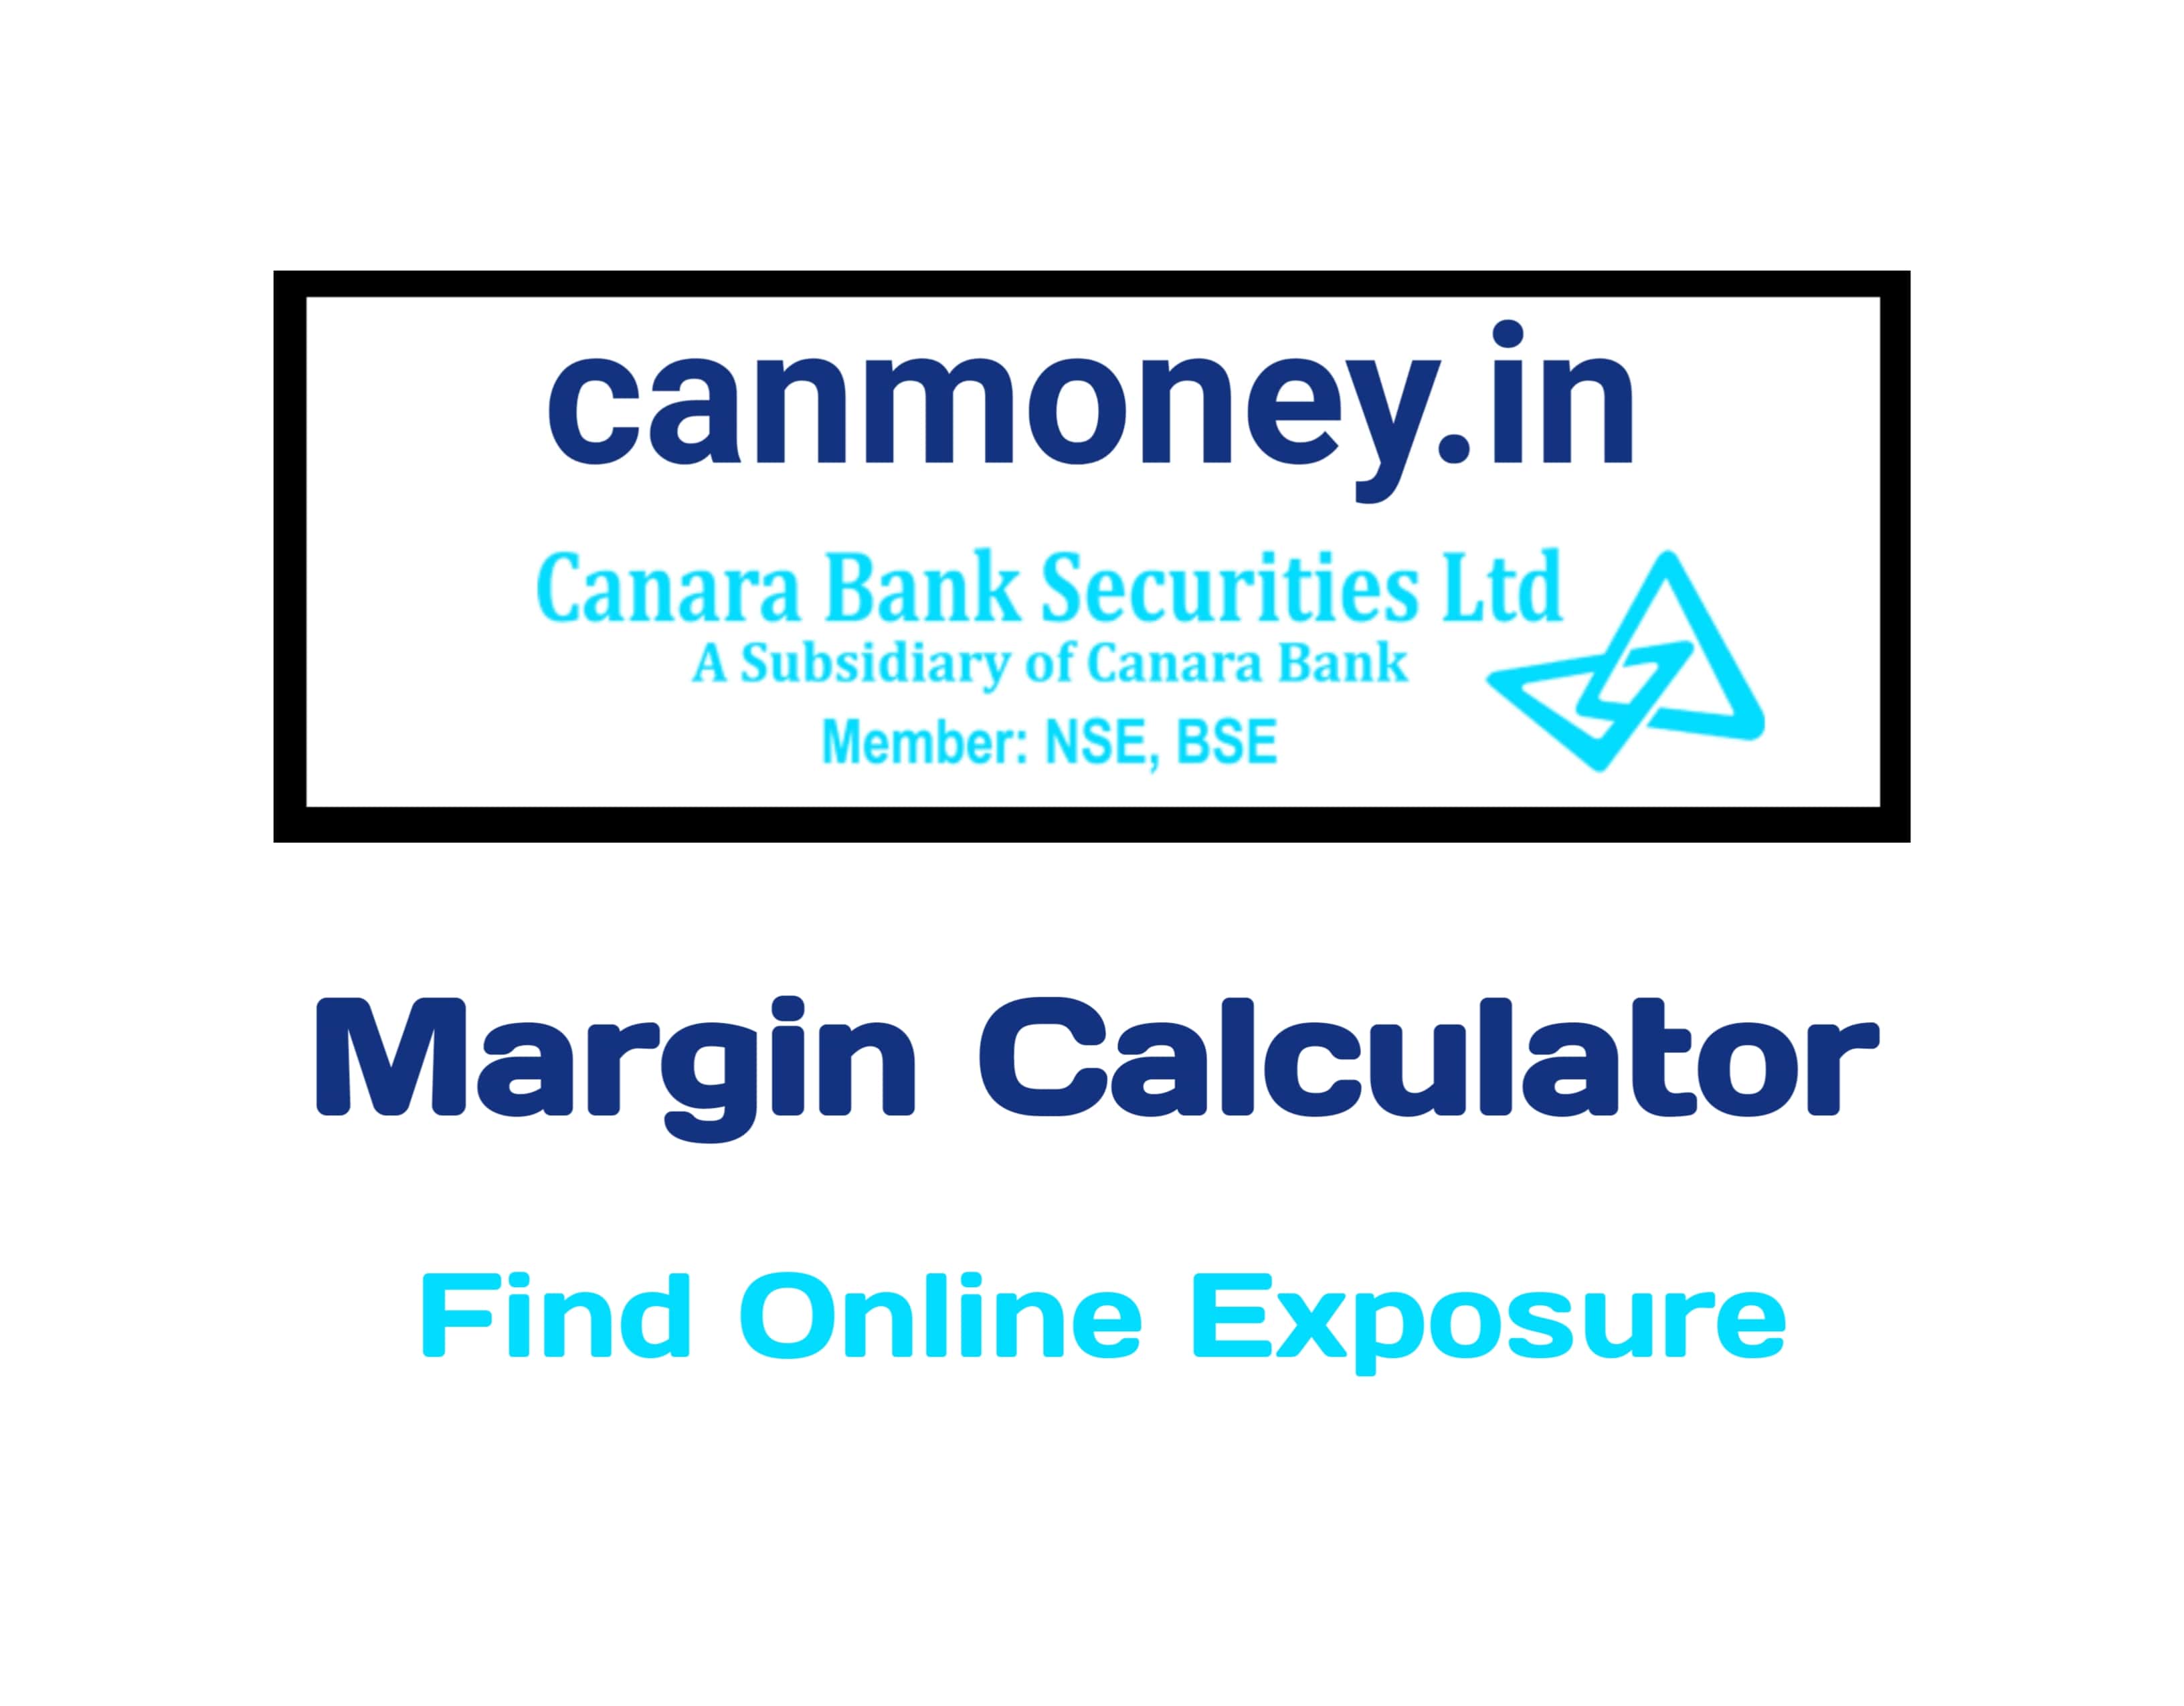 CanMoney Margin Calculator